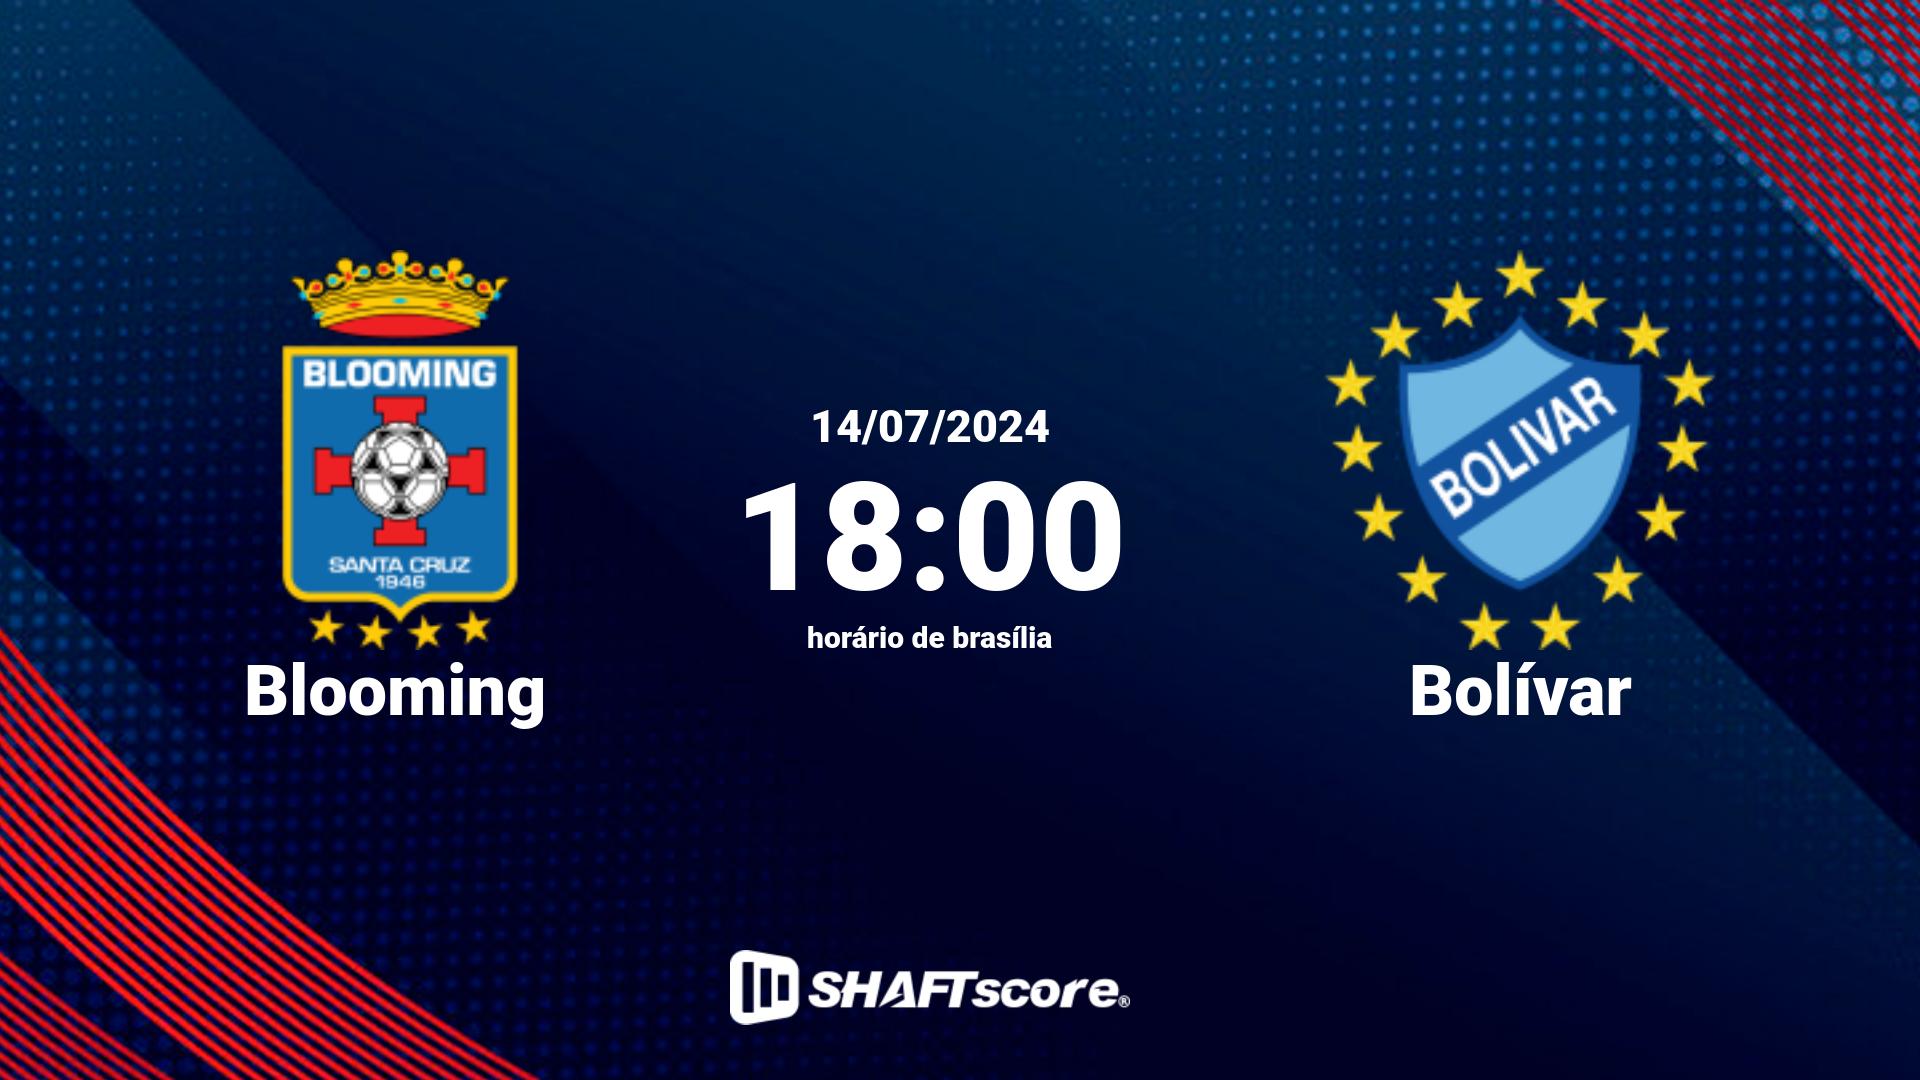 Estatísticas do jogo Blooming vs Bolívar 14.07 18:00